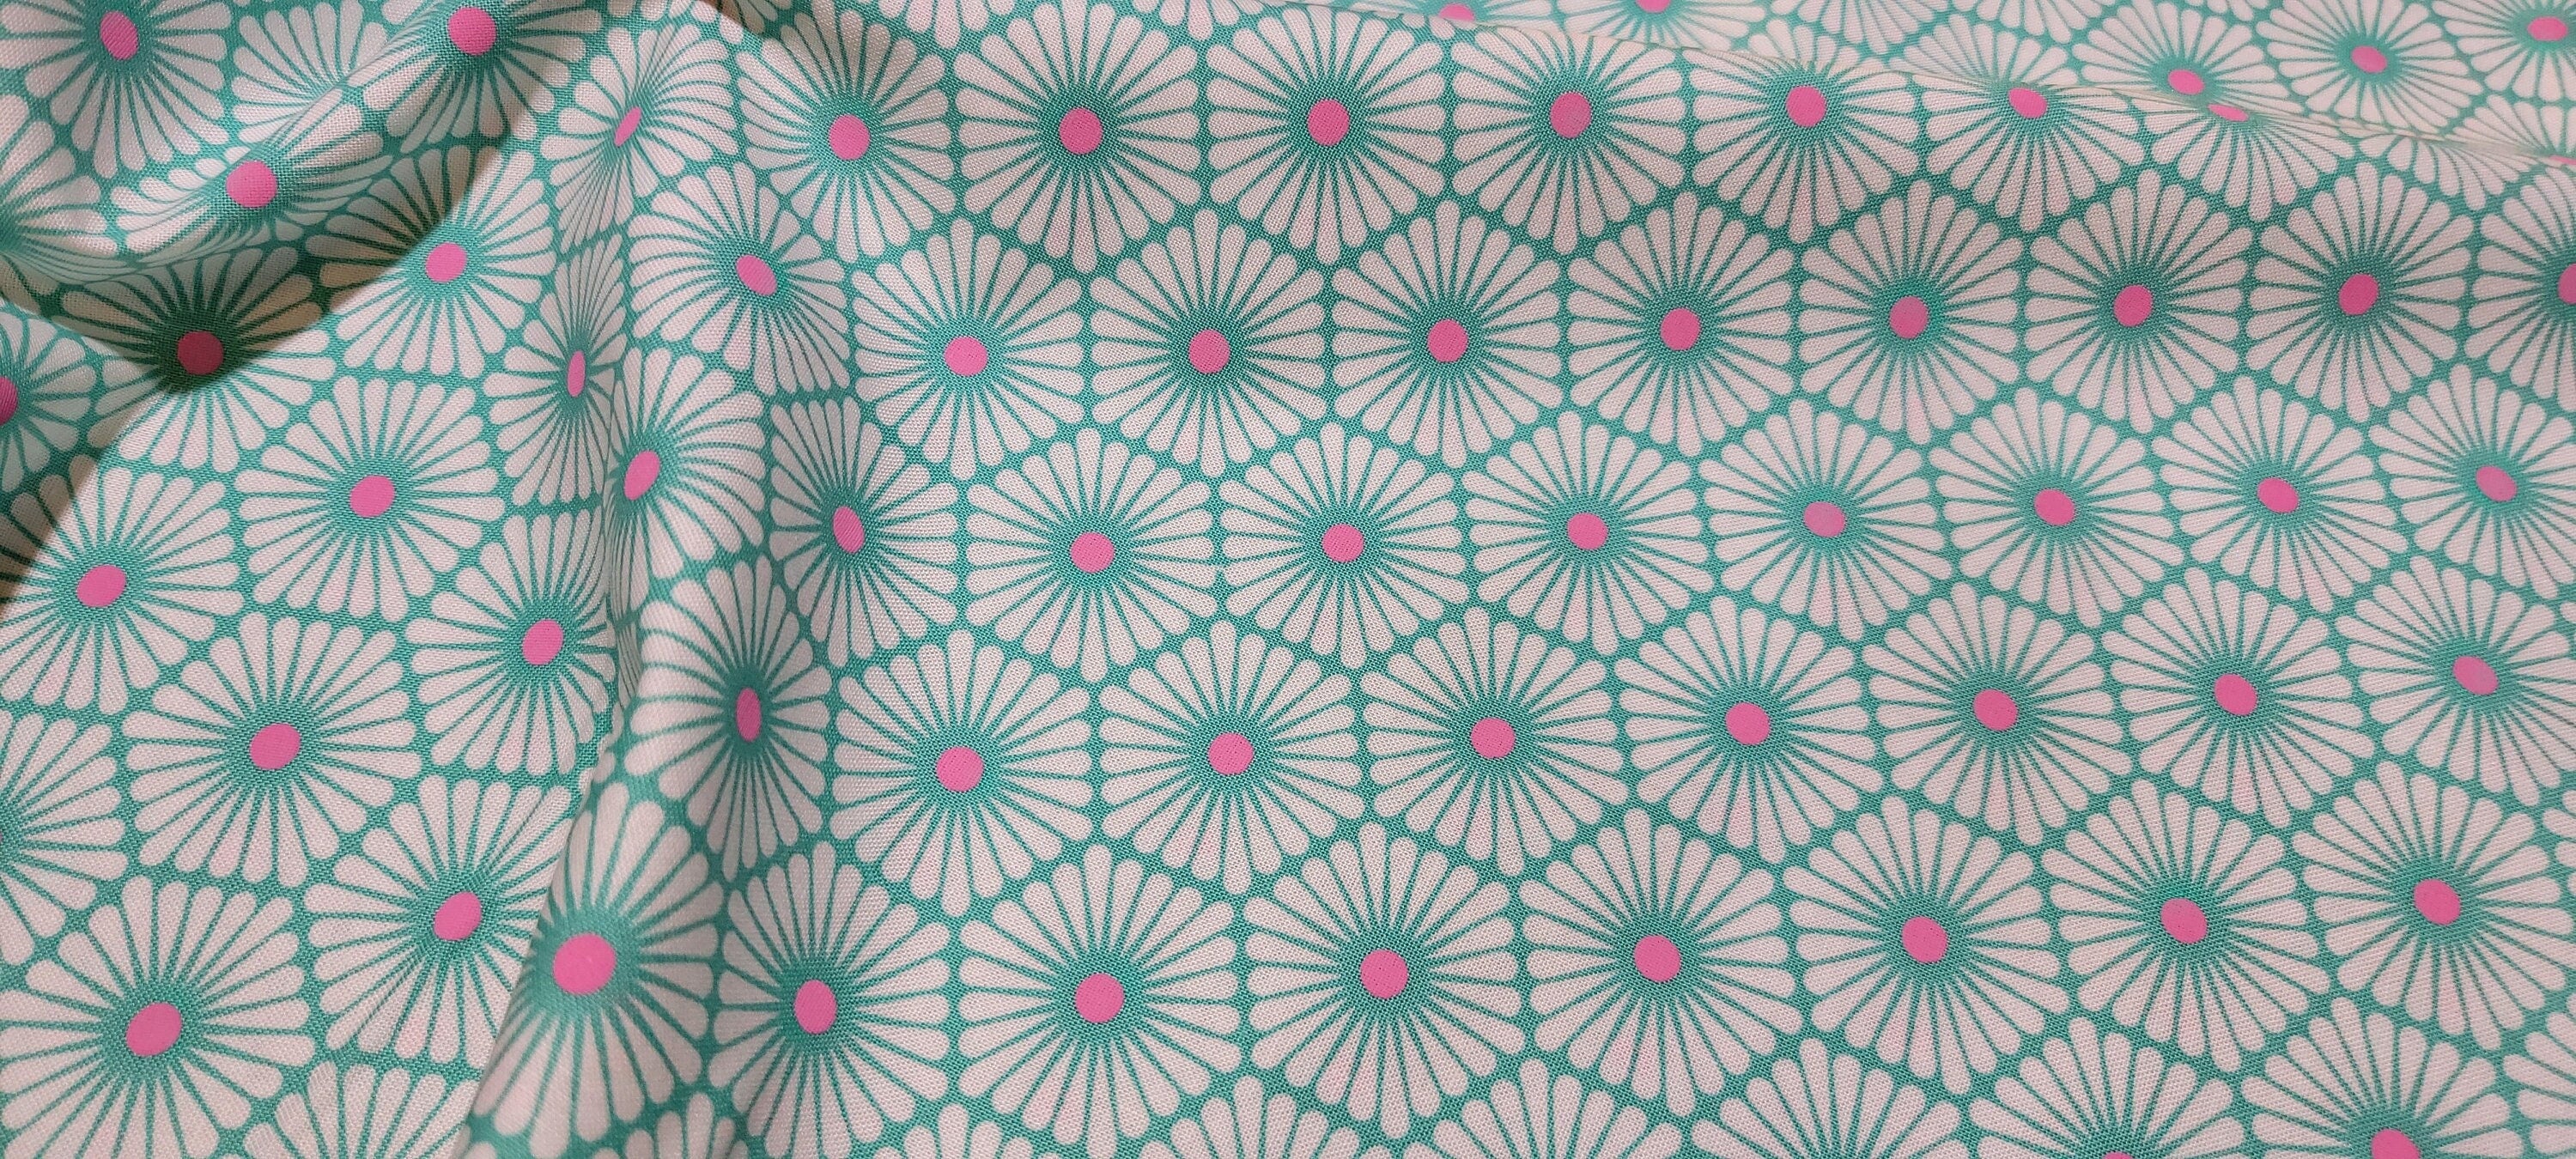 Tula Pink - Daisy Chain - Meadow - Besties from Free Spirit Fabrics